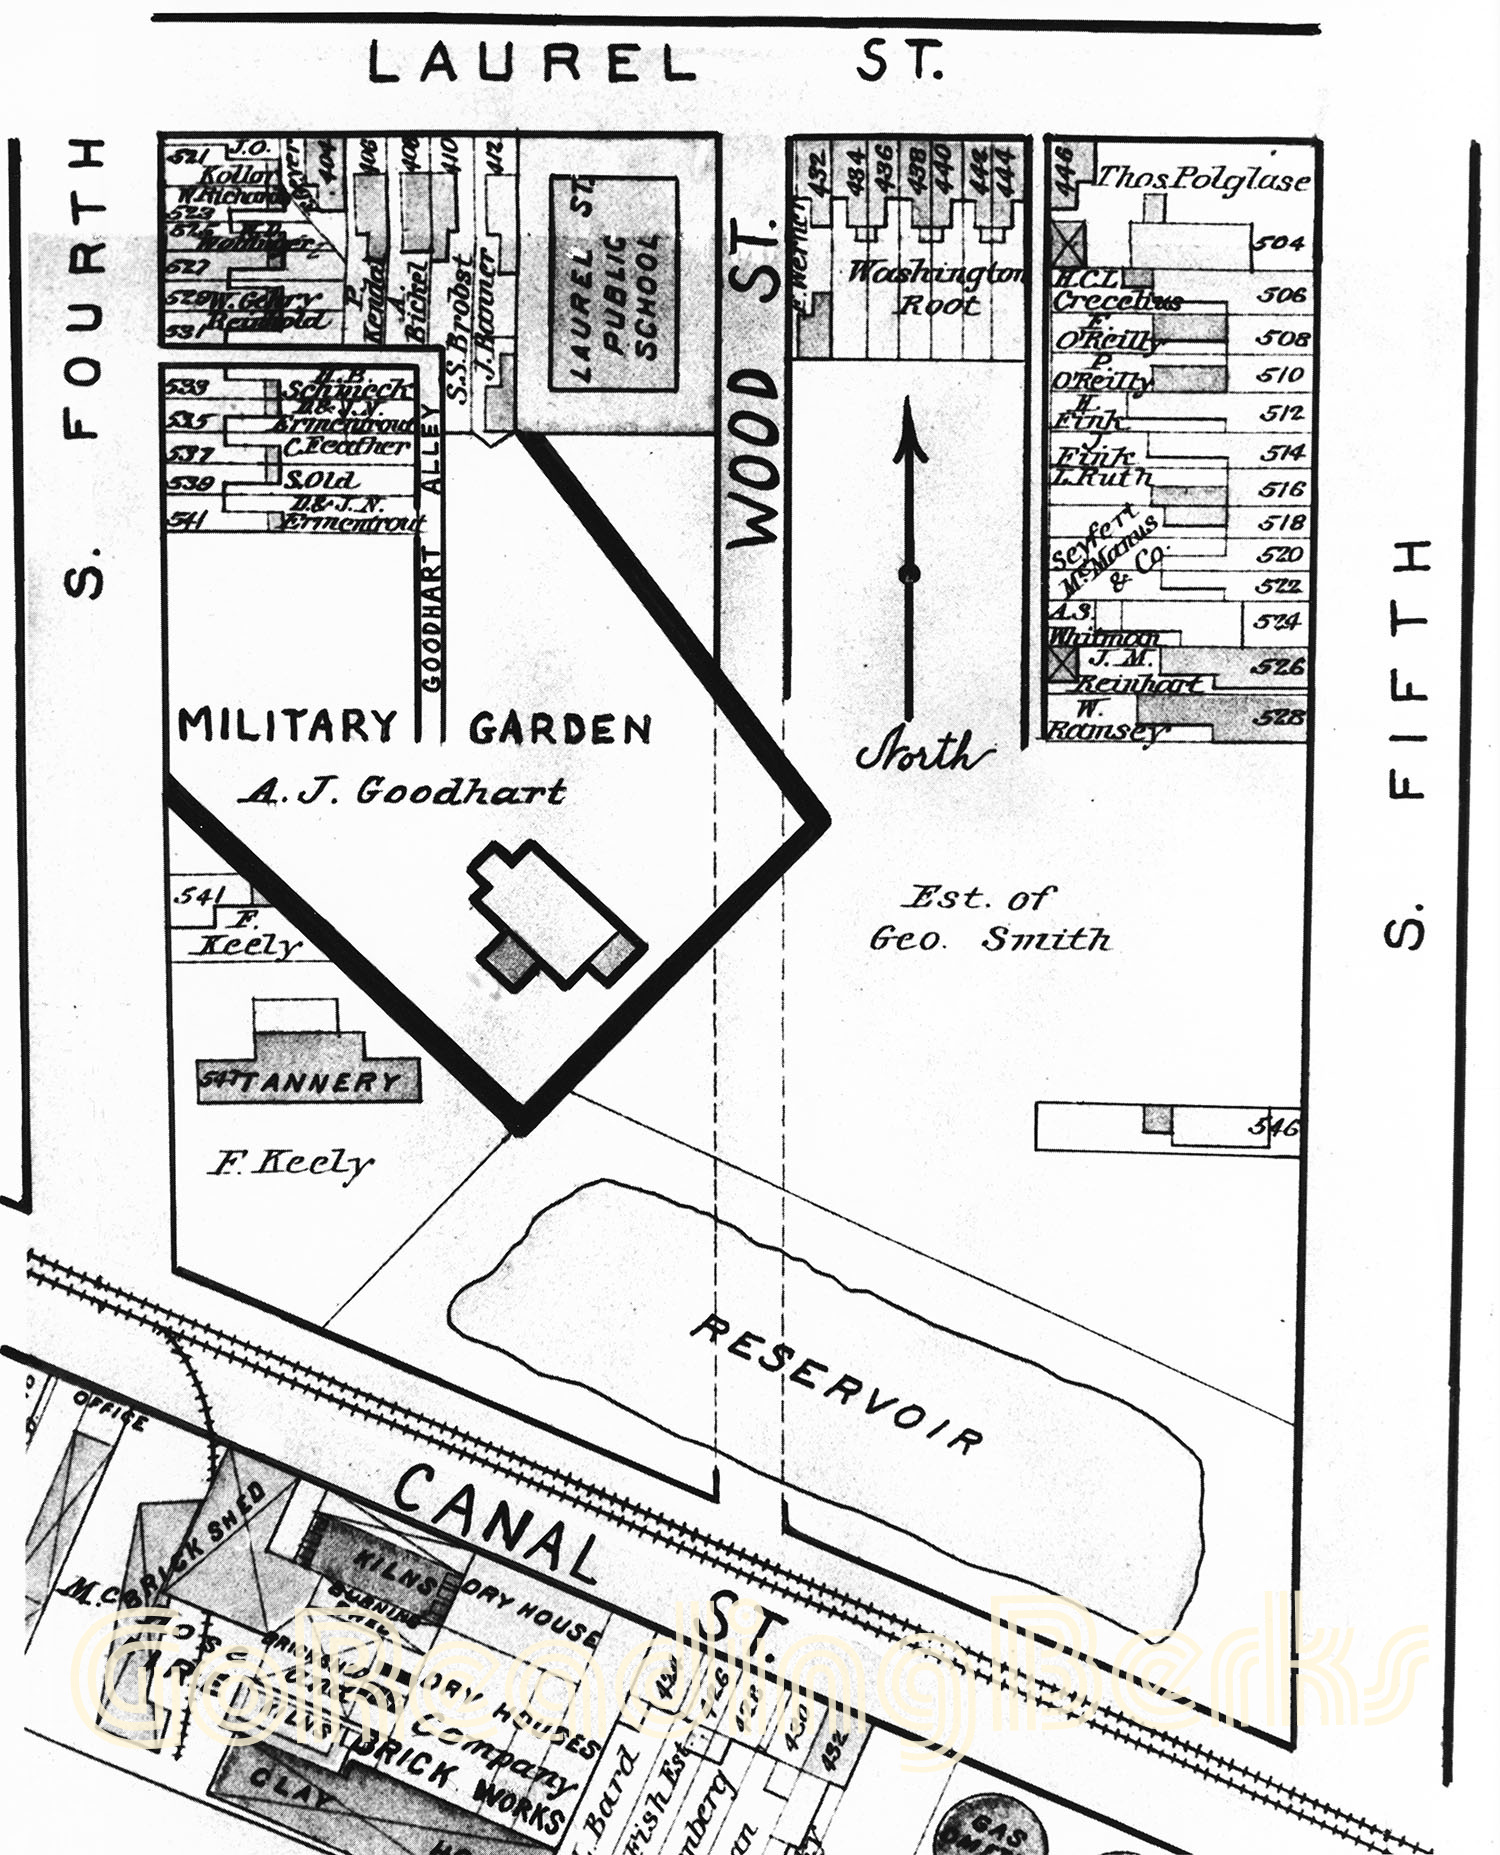 Goodhart’s Military Garden and Hotel